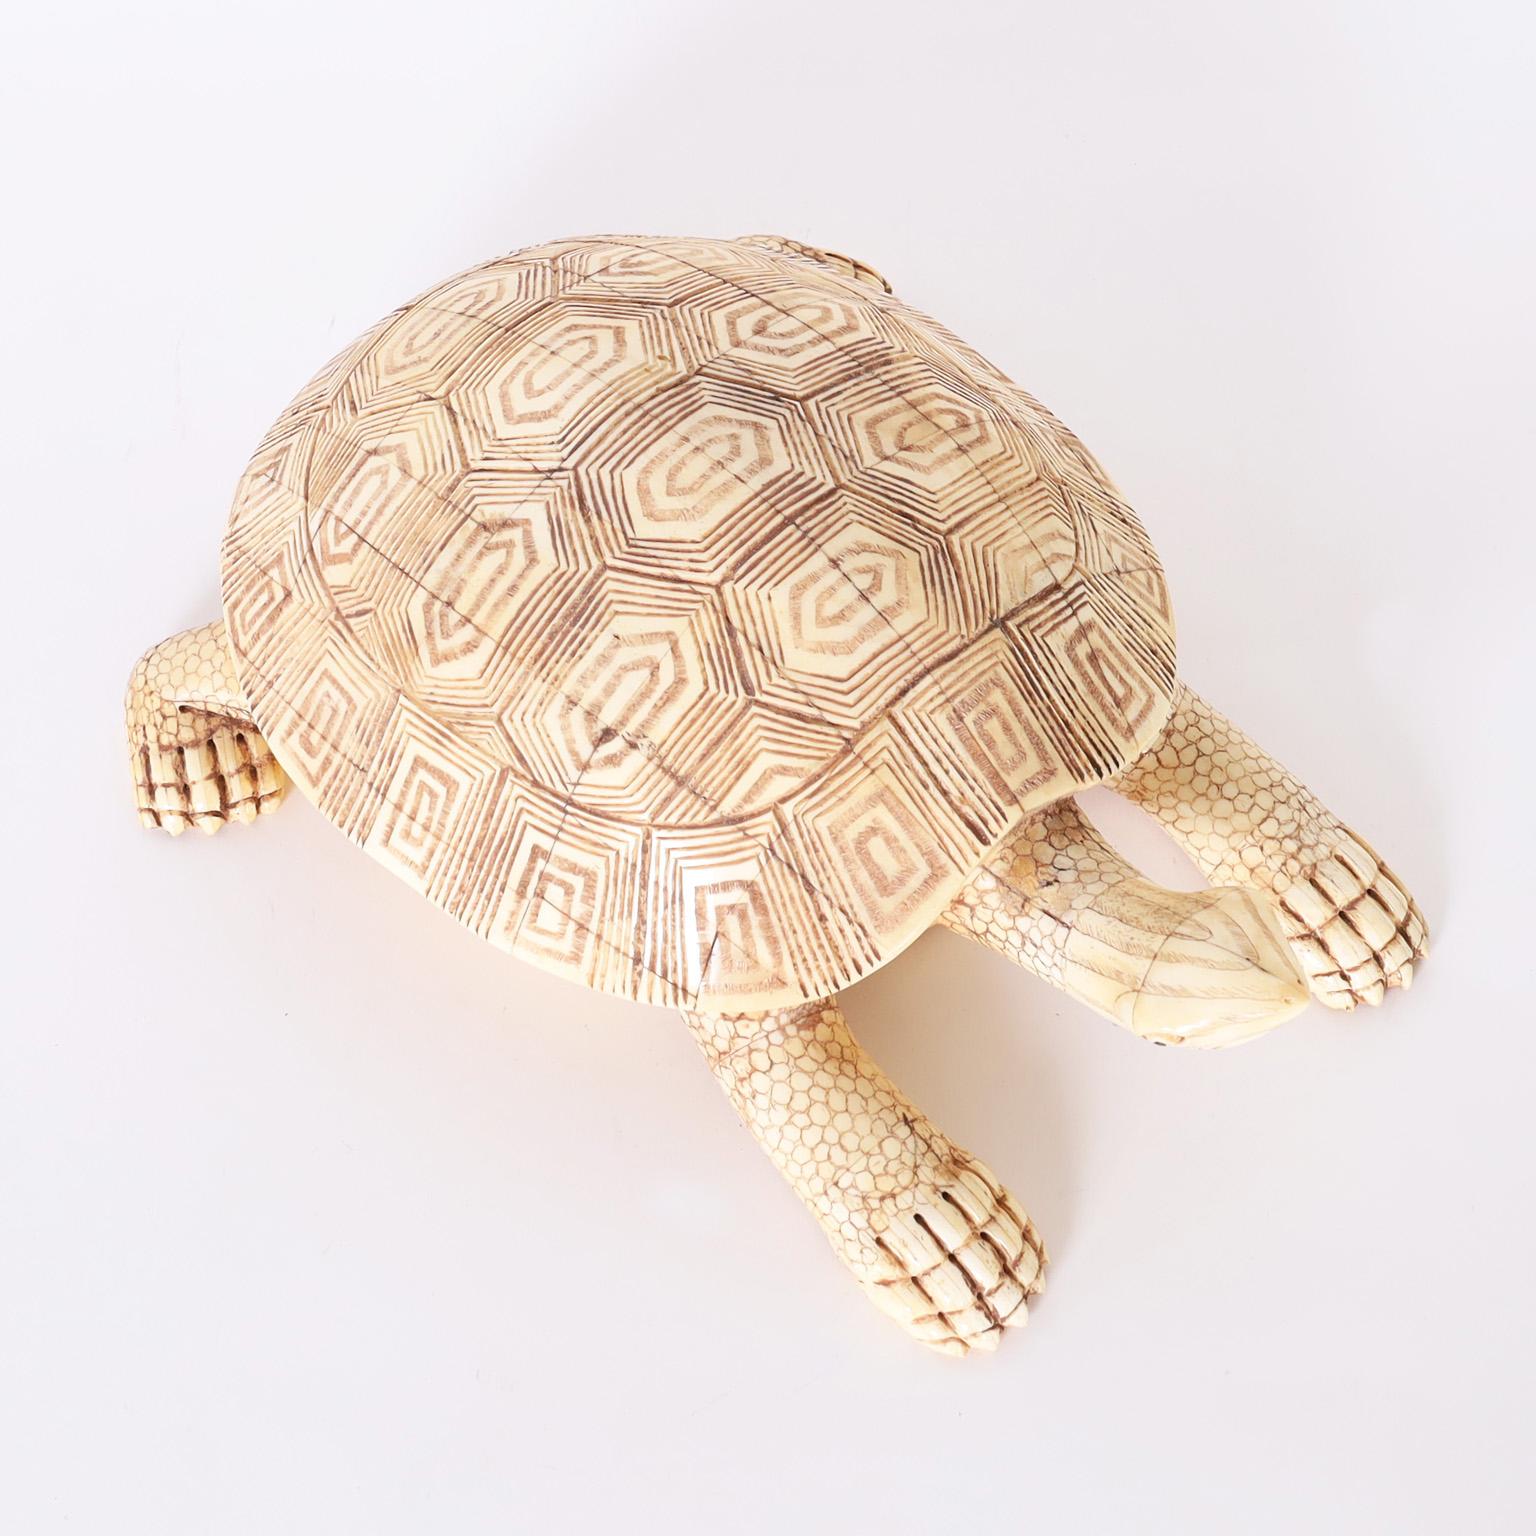 Carved Bone Turtle Sculpture For Sale 1